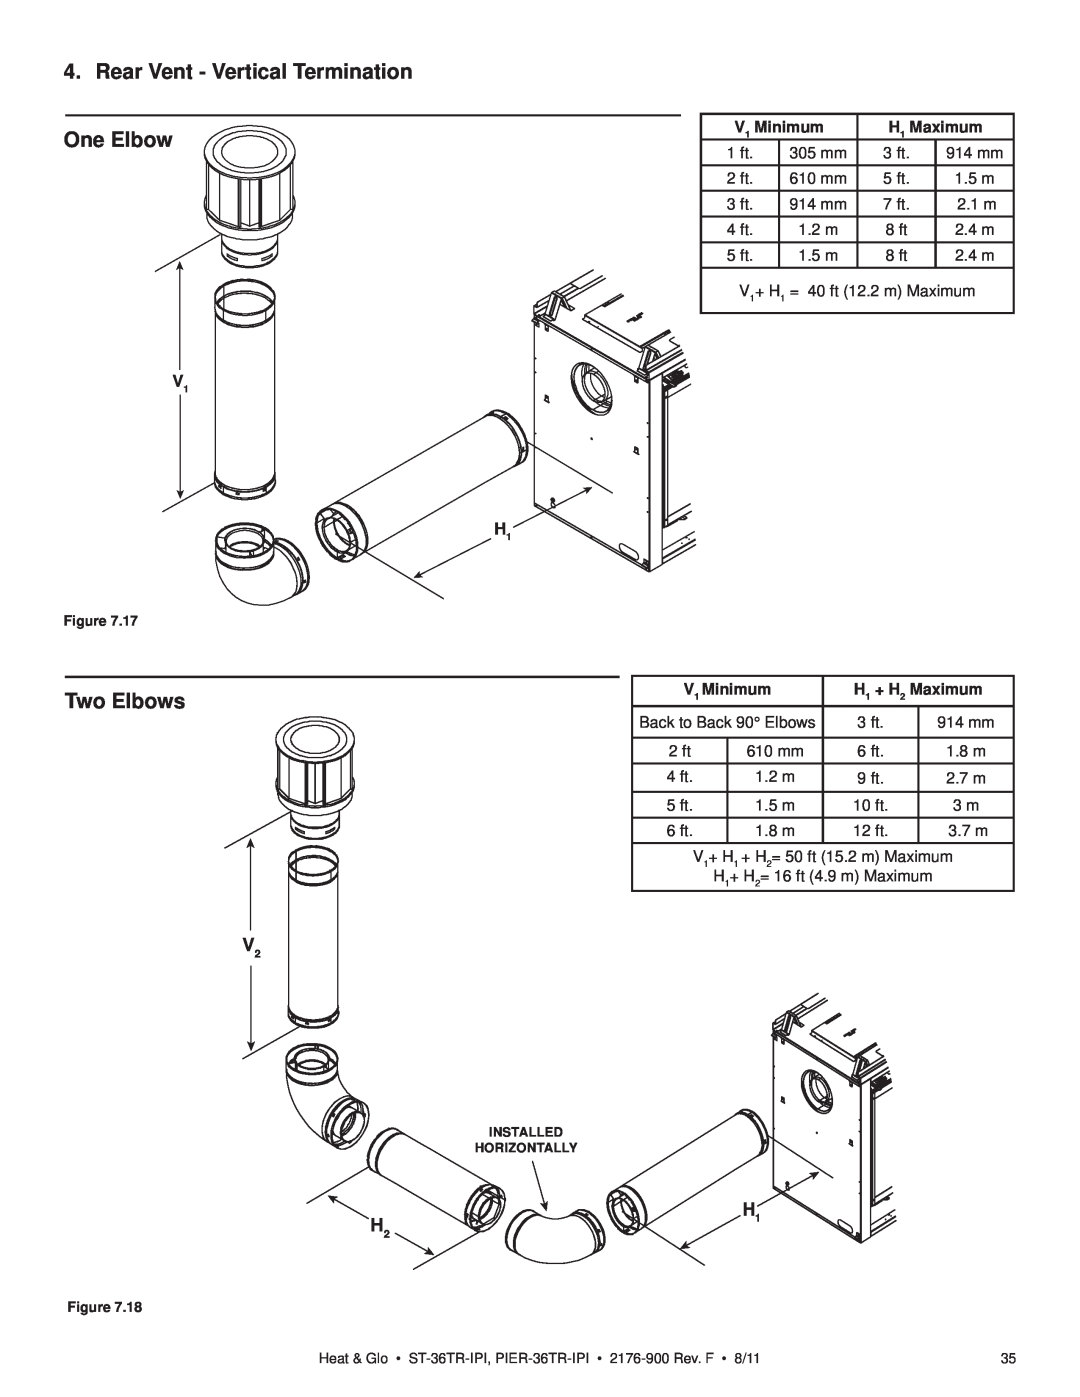 Heat & Glo LifeStyle ST-36TR-IPI Rear Vent - Vertical Termination One Elbow, Two Elbows, V1 Minimum, H1 Maximum 